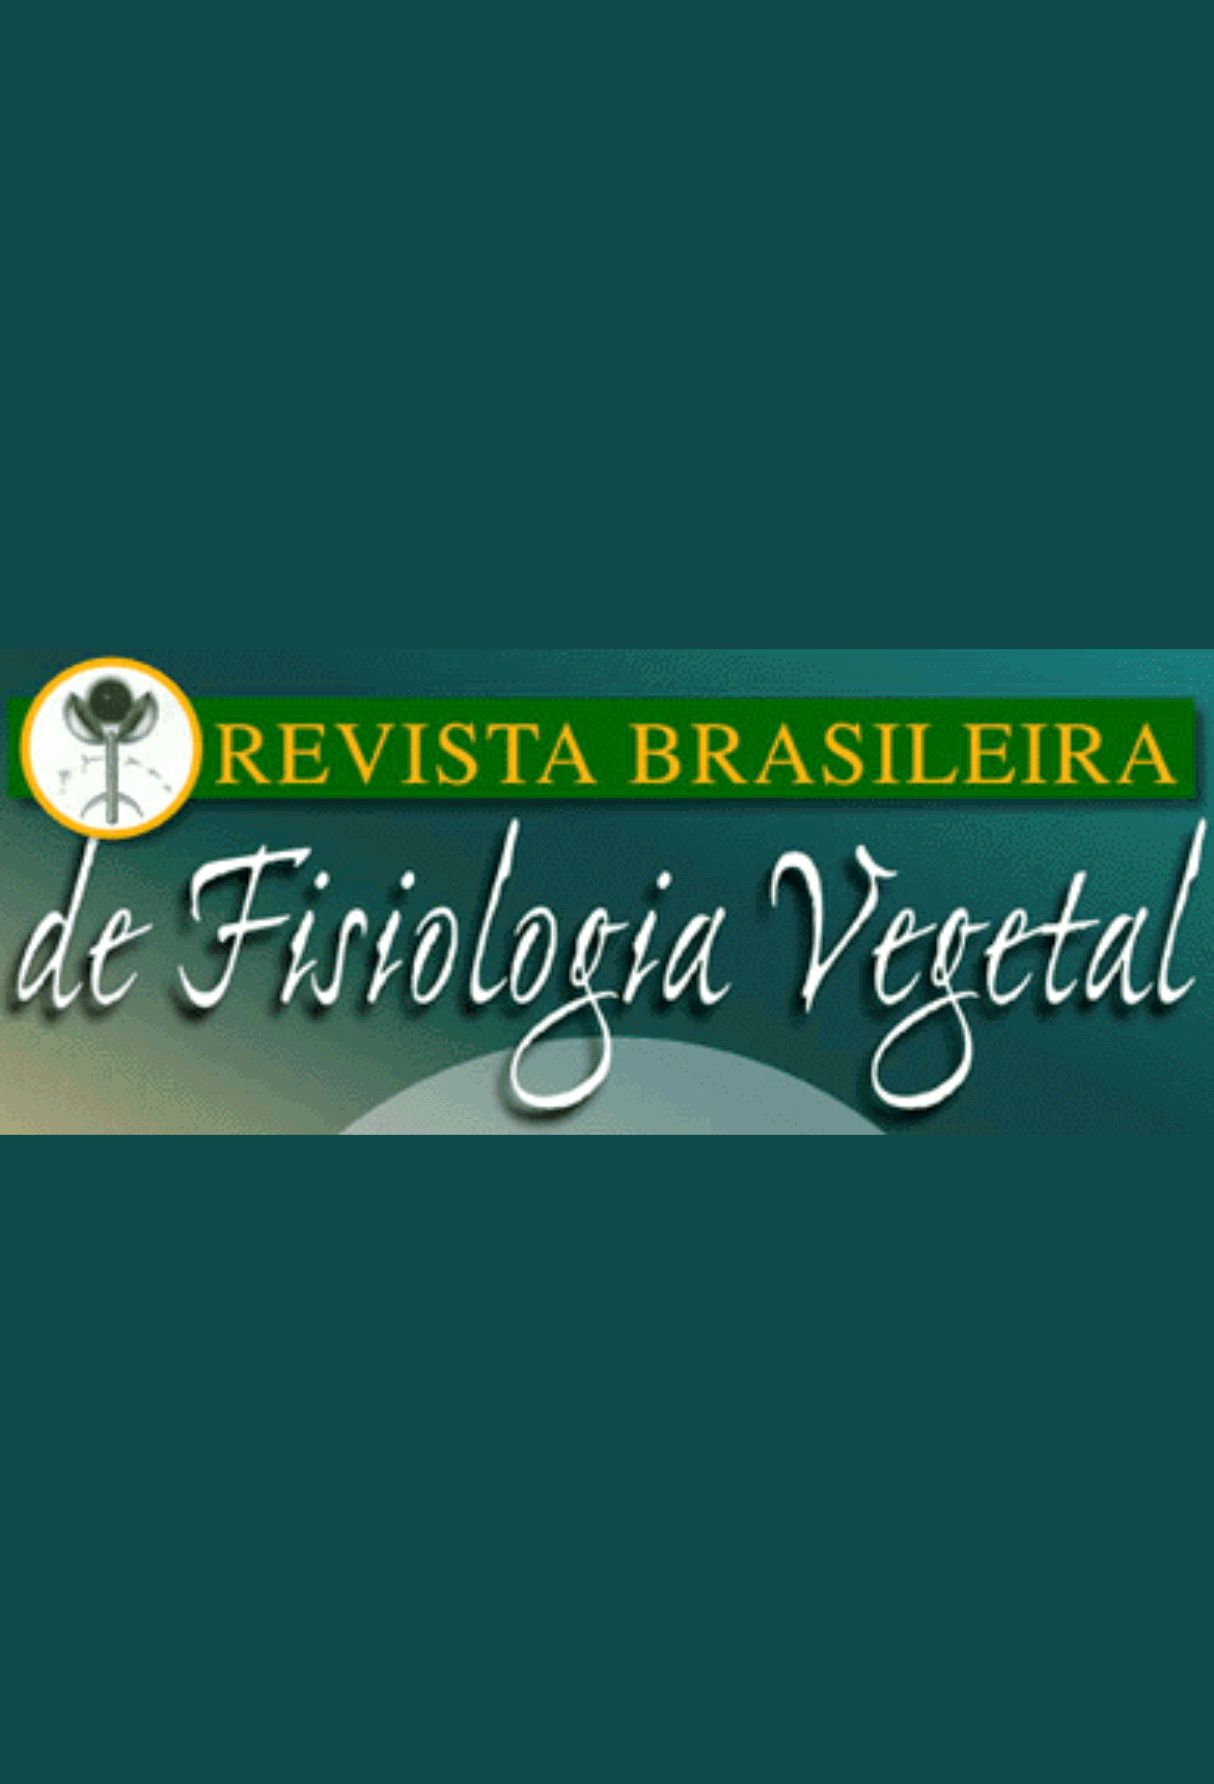 Capa: Revista Brasileira de Fisiologia Vegetal